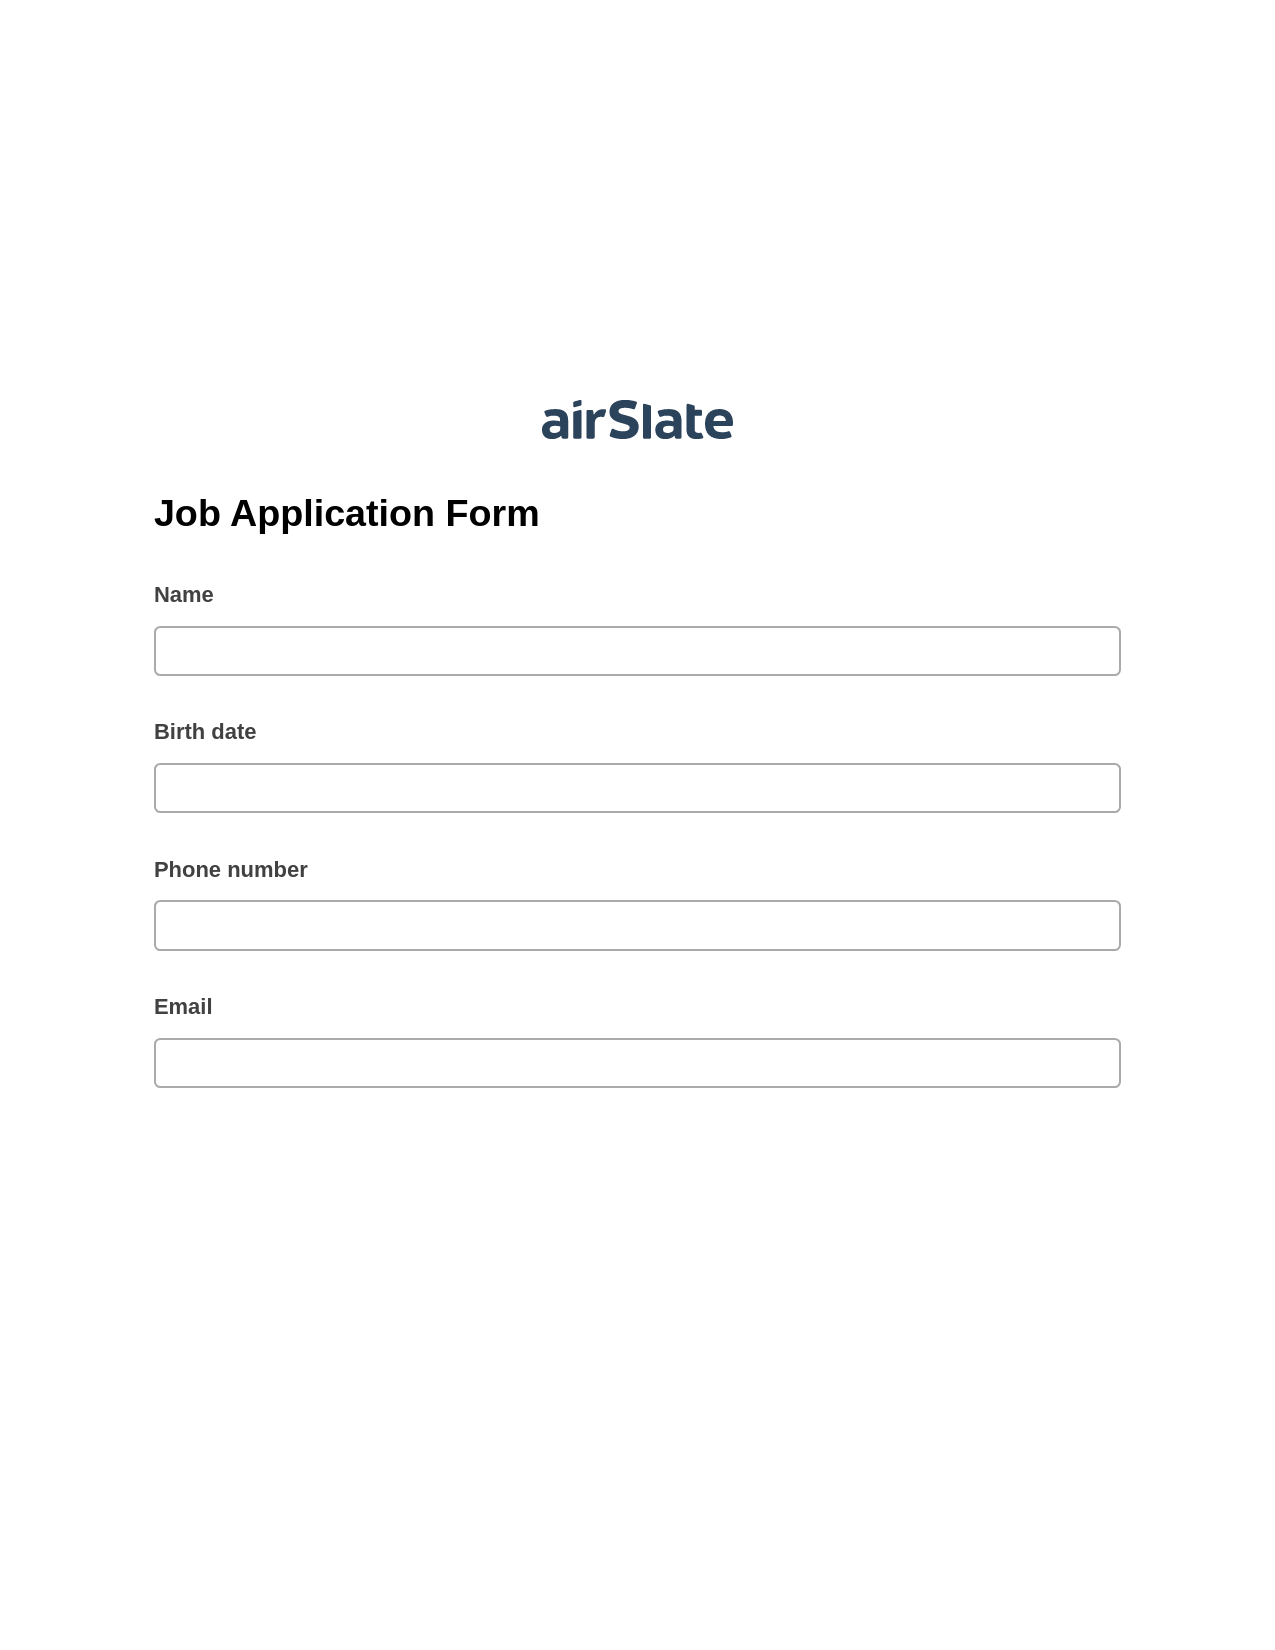 Multirole Job Application Form Pre-fill from AirTable Bot, SendGrid send Campaign bot, Slack Two-Way Binding Bot